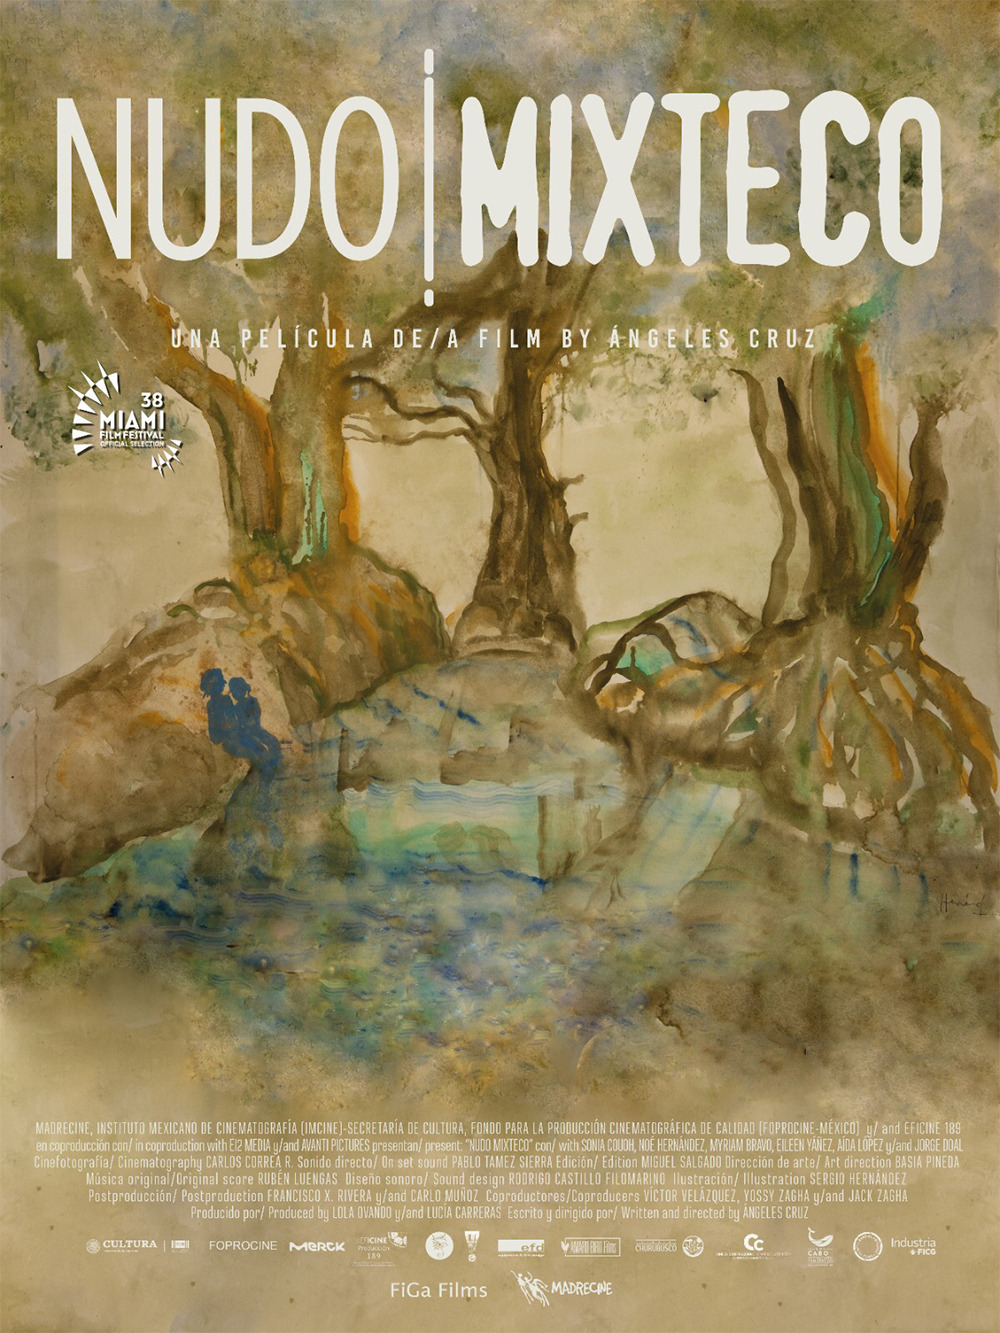 Extra Large Movie Poster Image for Nudo mixteco 